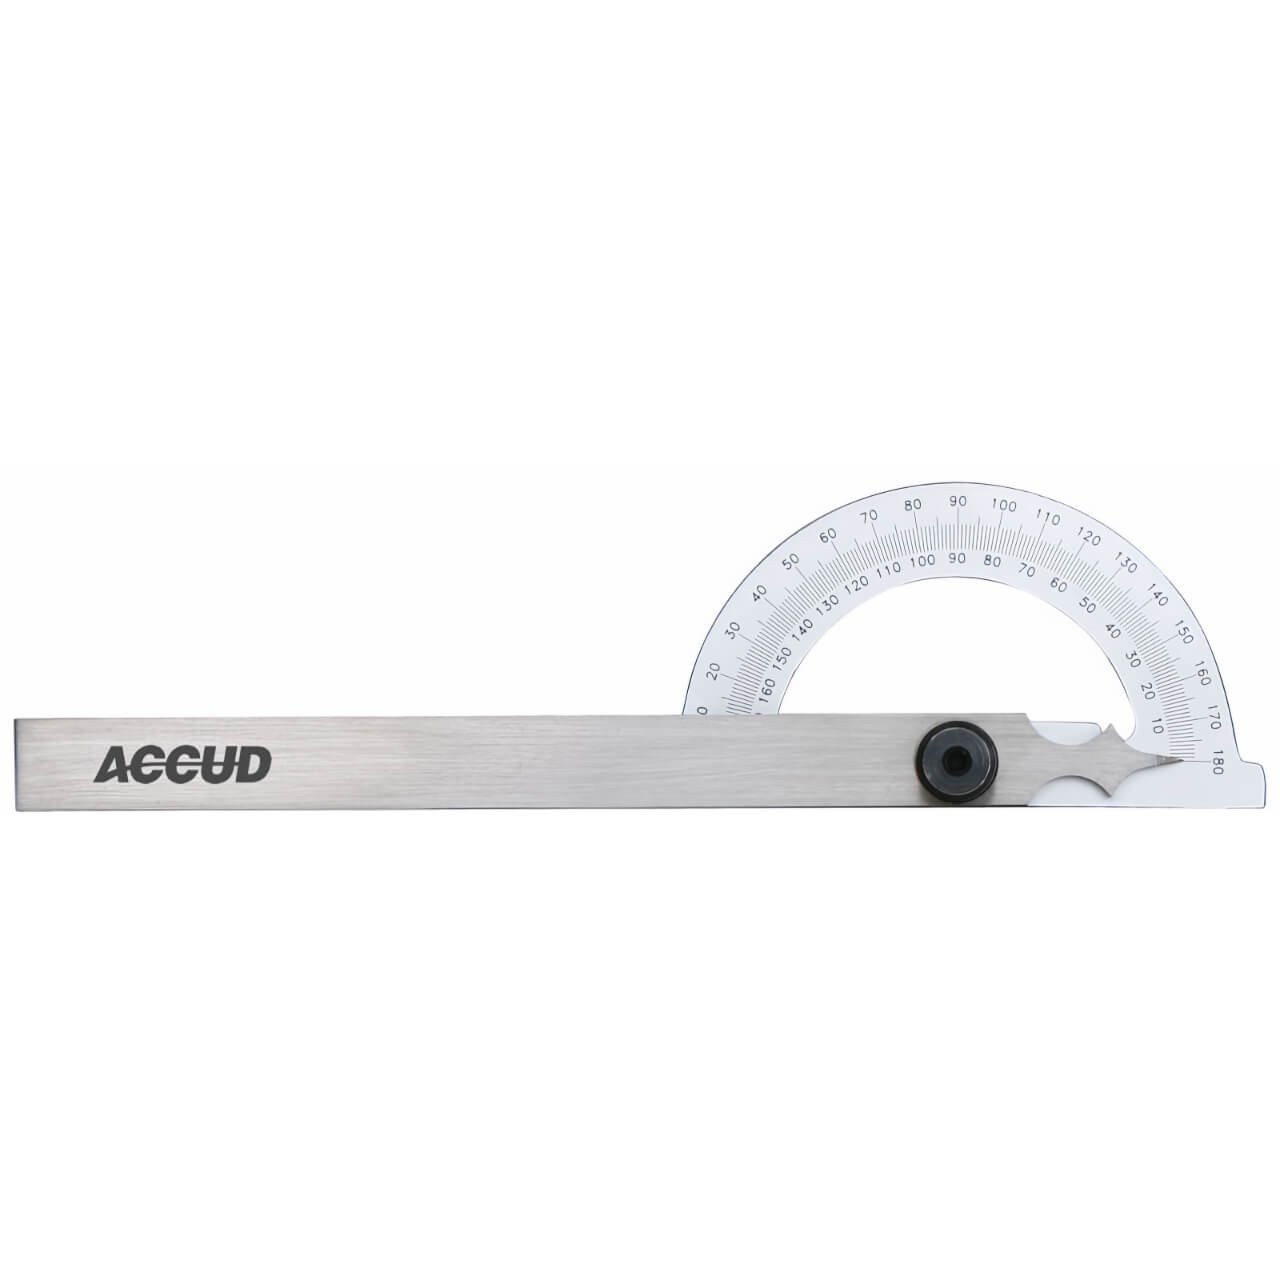 Accud Protractor 120x150mm 0-180degree